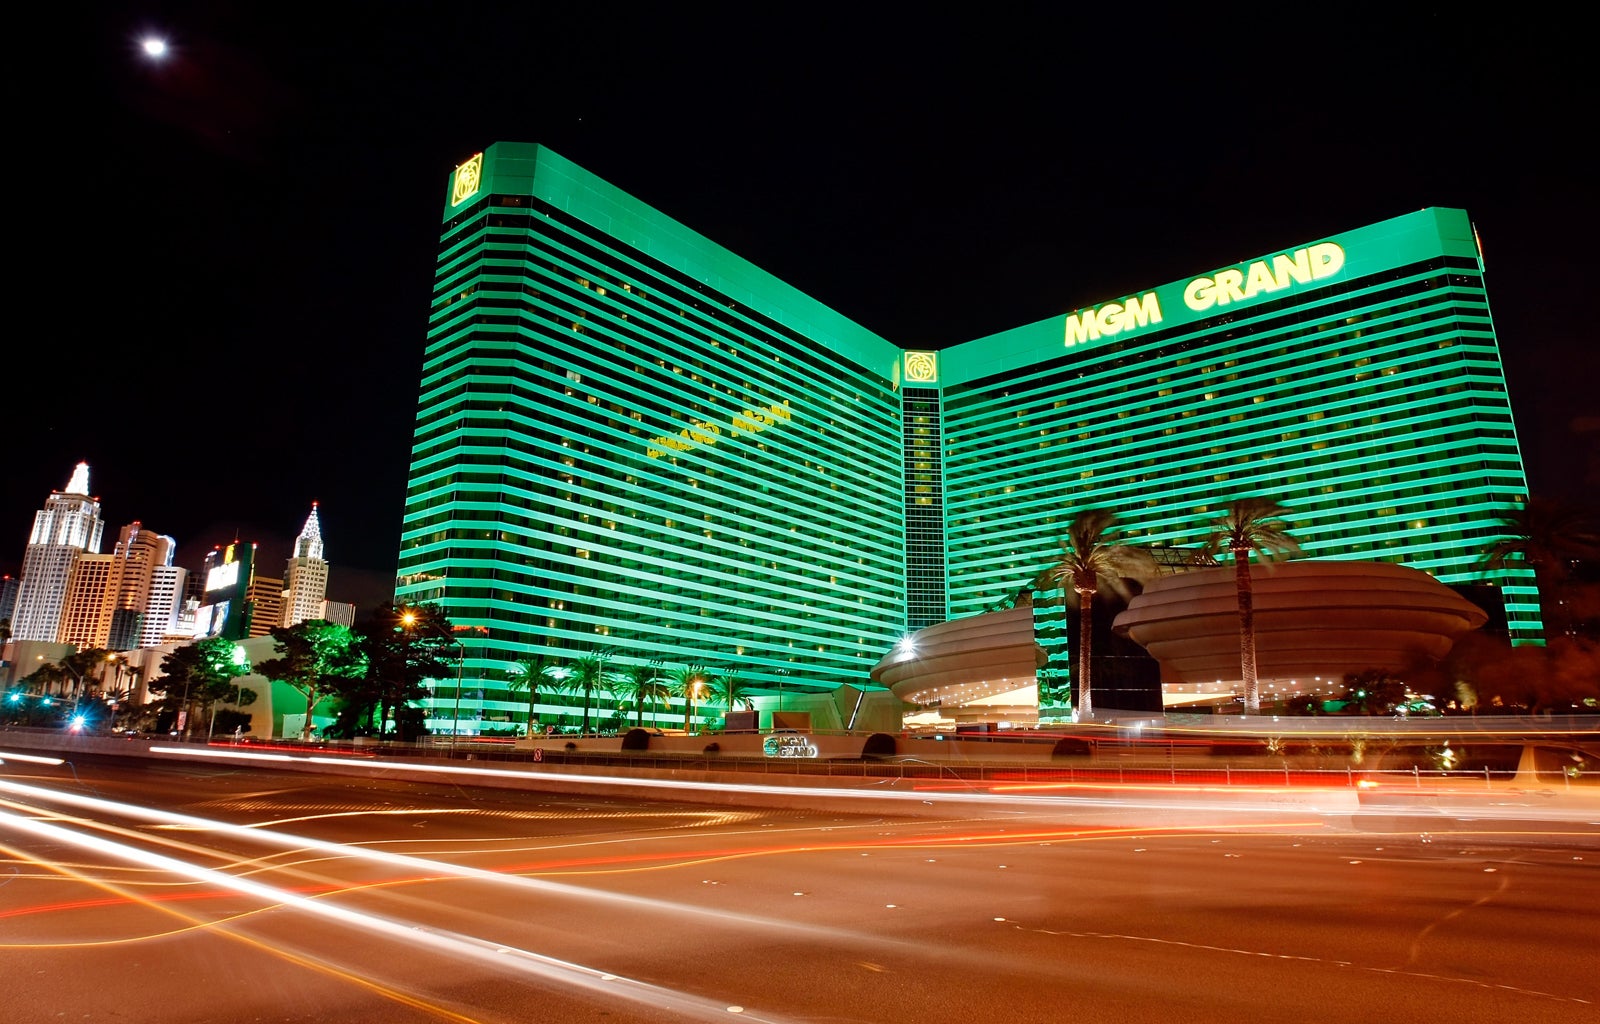 Party Pool - Picture of Signature at MGM Grand, Las Vegas - Tripadvisor